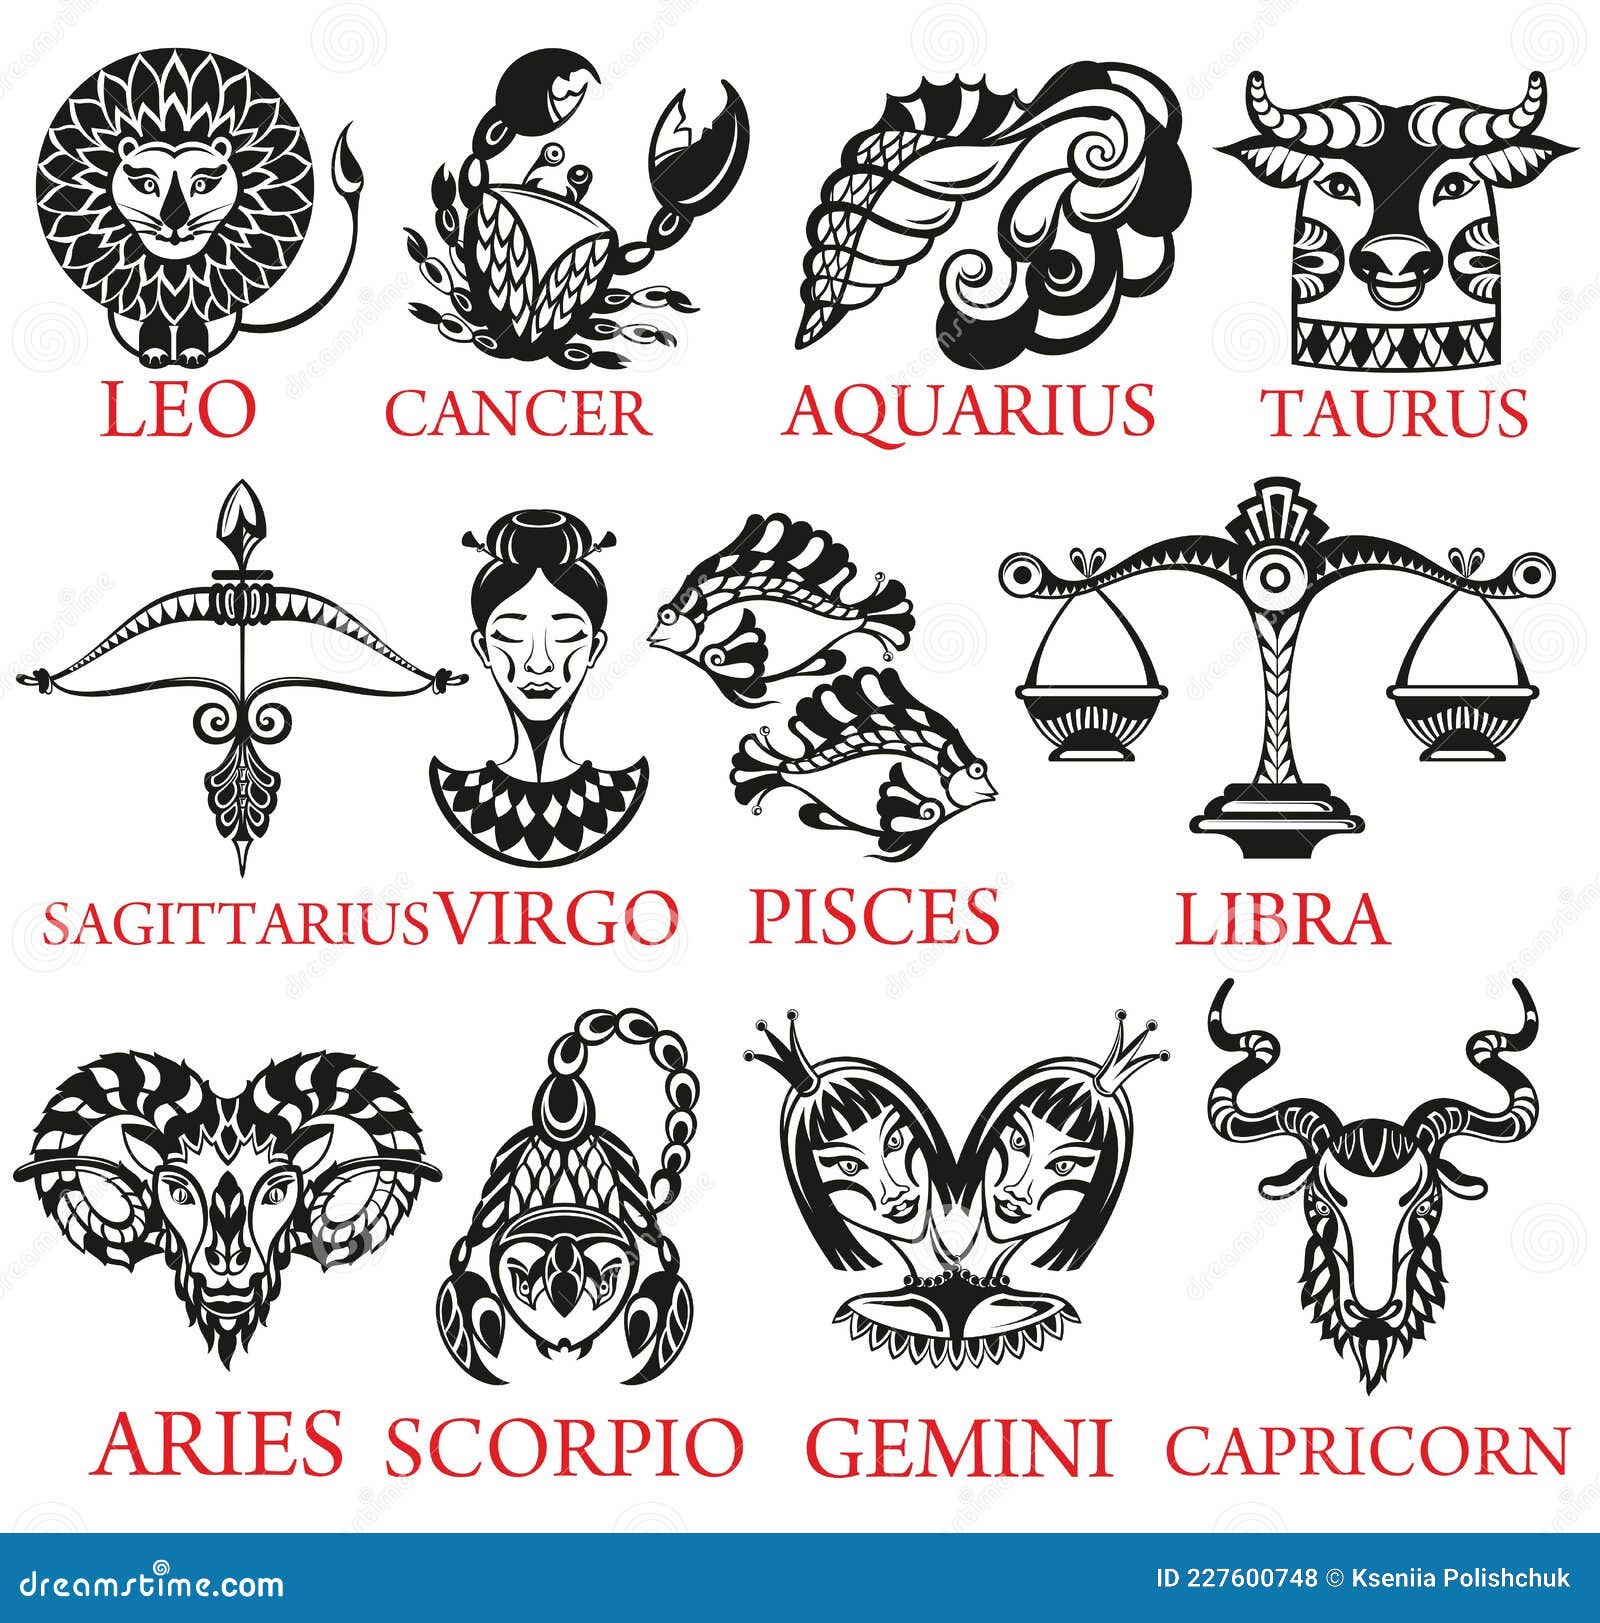 Best Zodiac Tattoos For Each Sign | YourTango